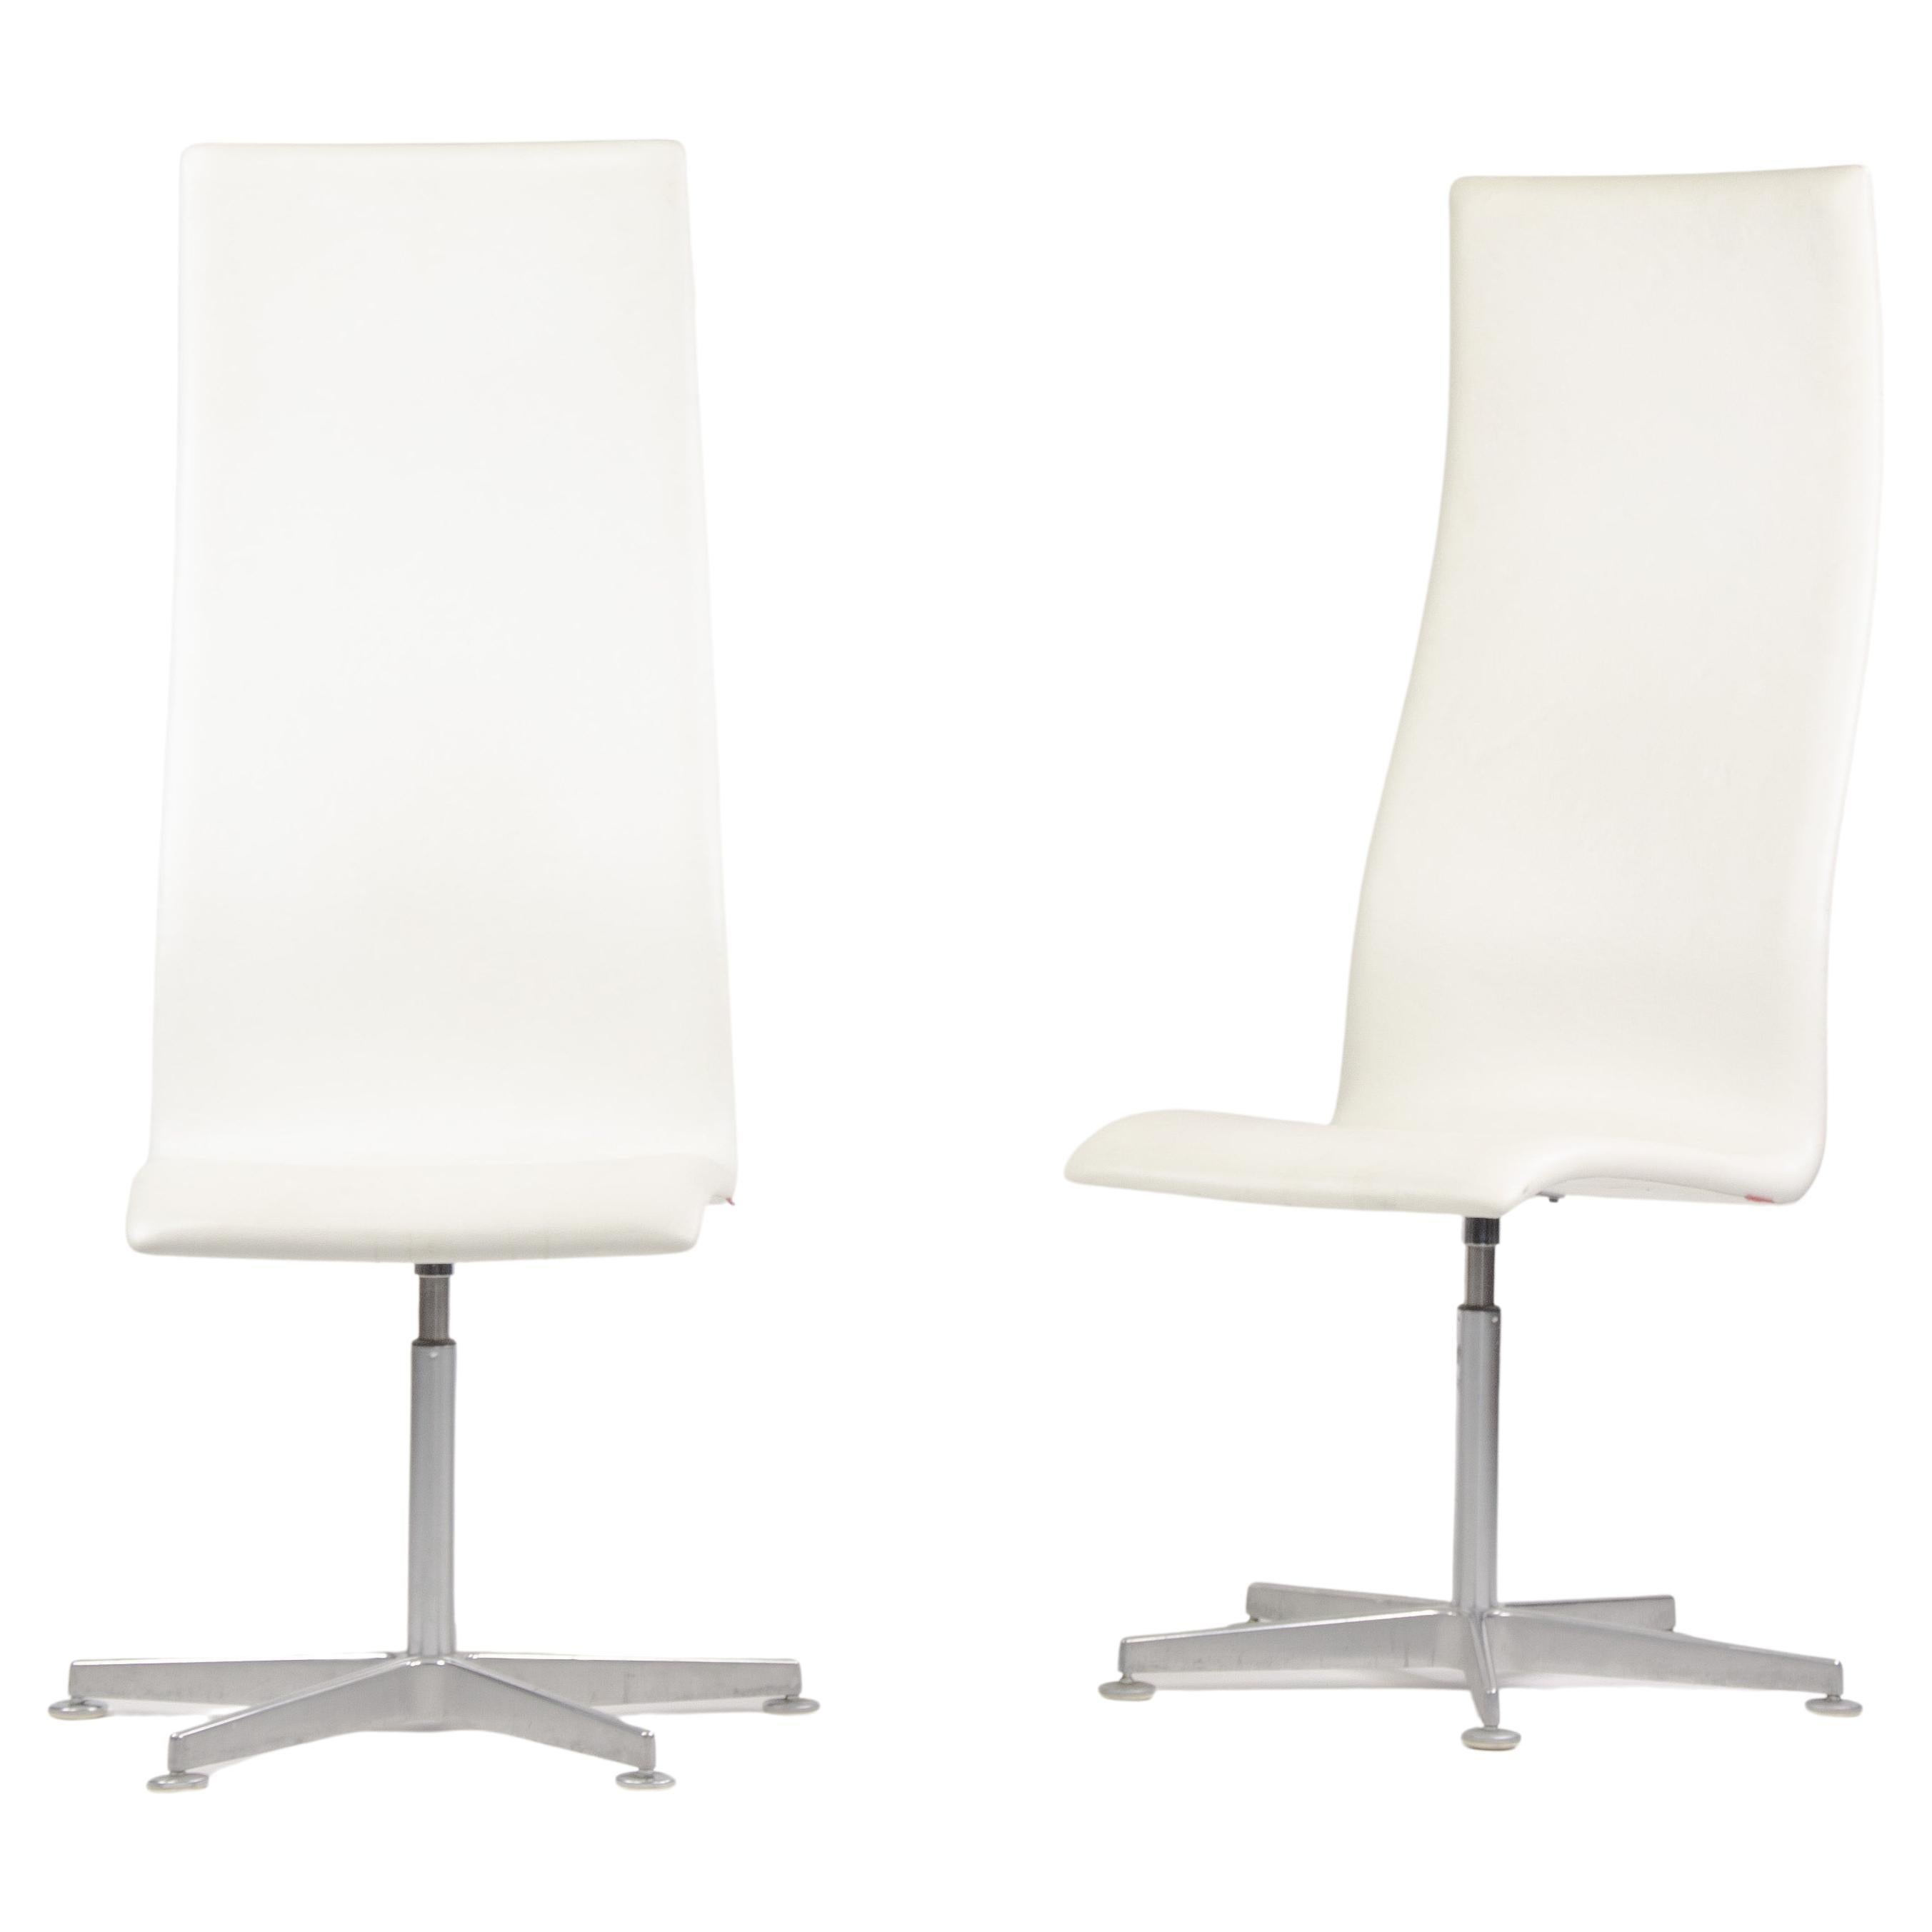 Fritz Hansen Arne Jacobsen Großer Oxford-Stuhl aus weißem Leder 2007 4x verfügbar